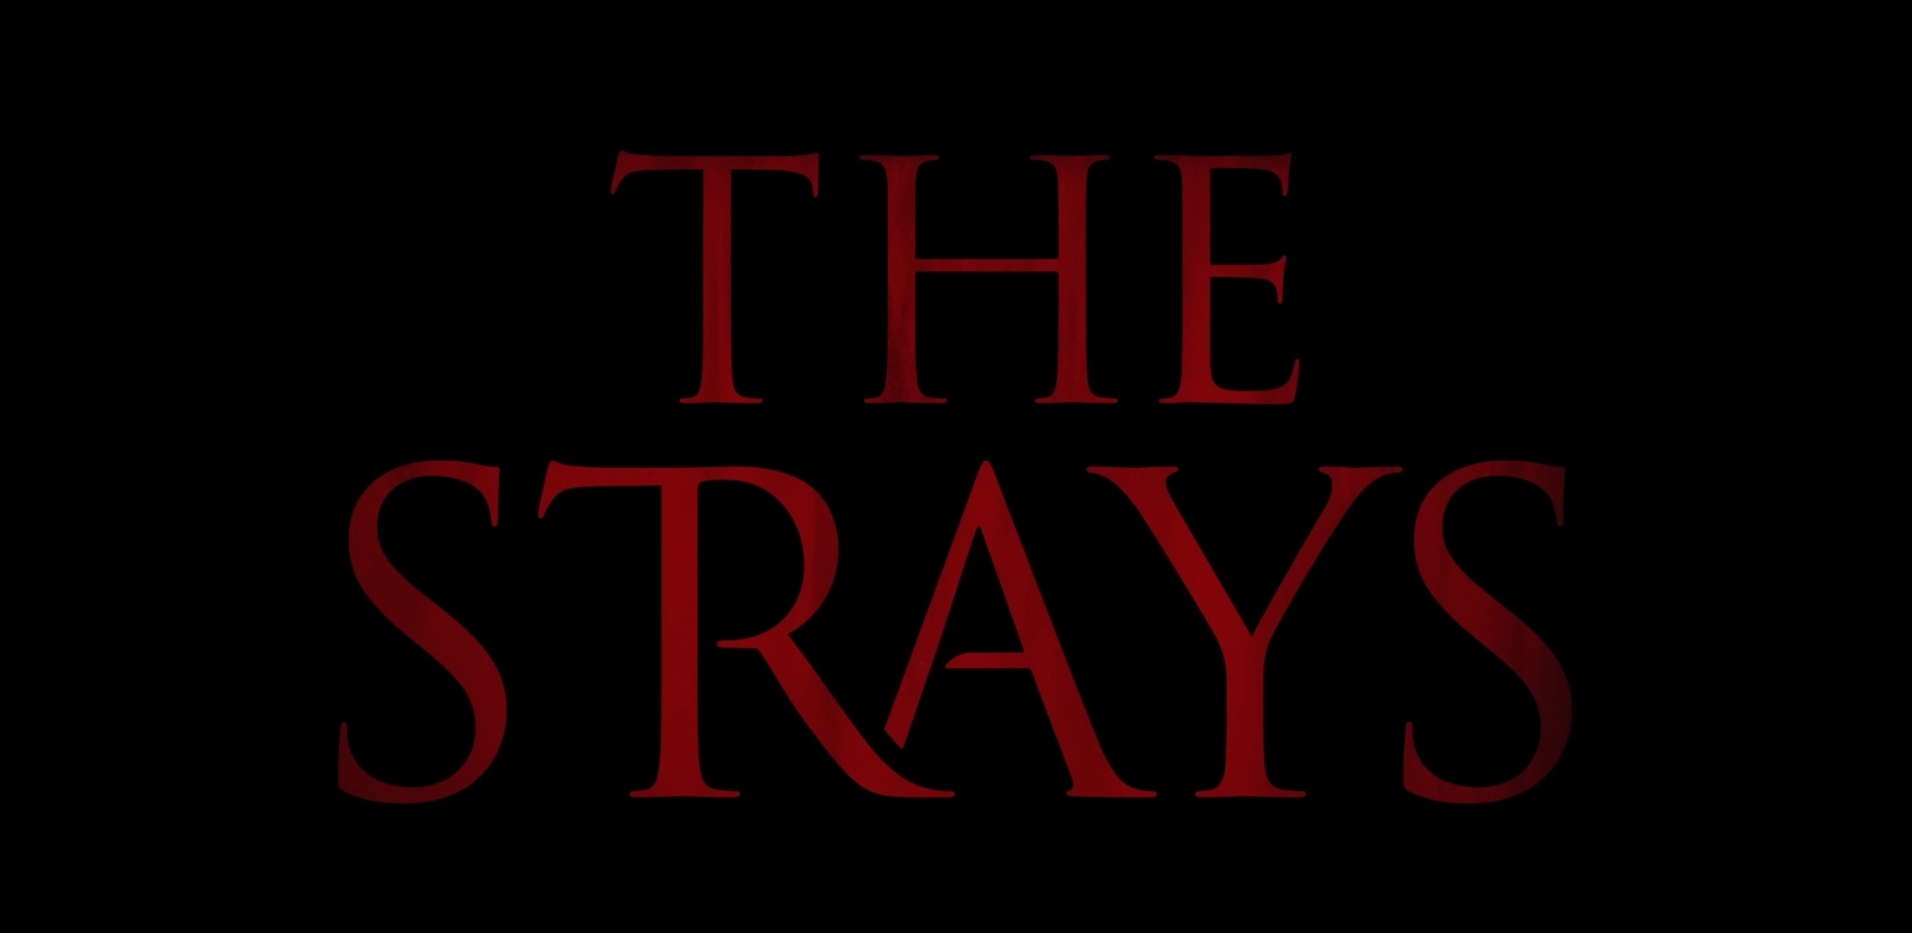 The Strays